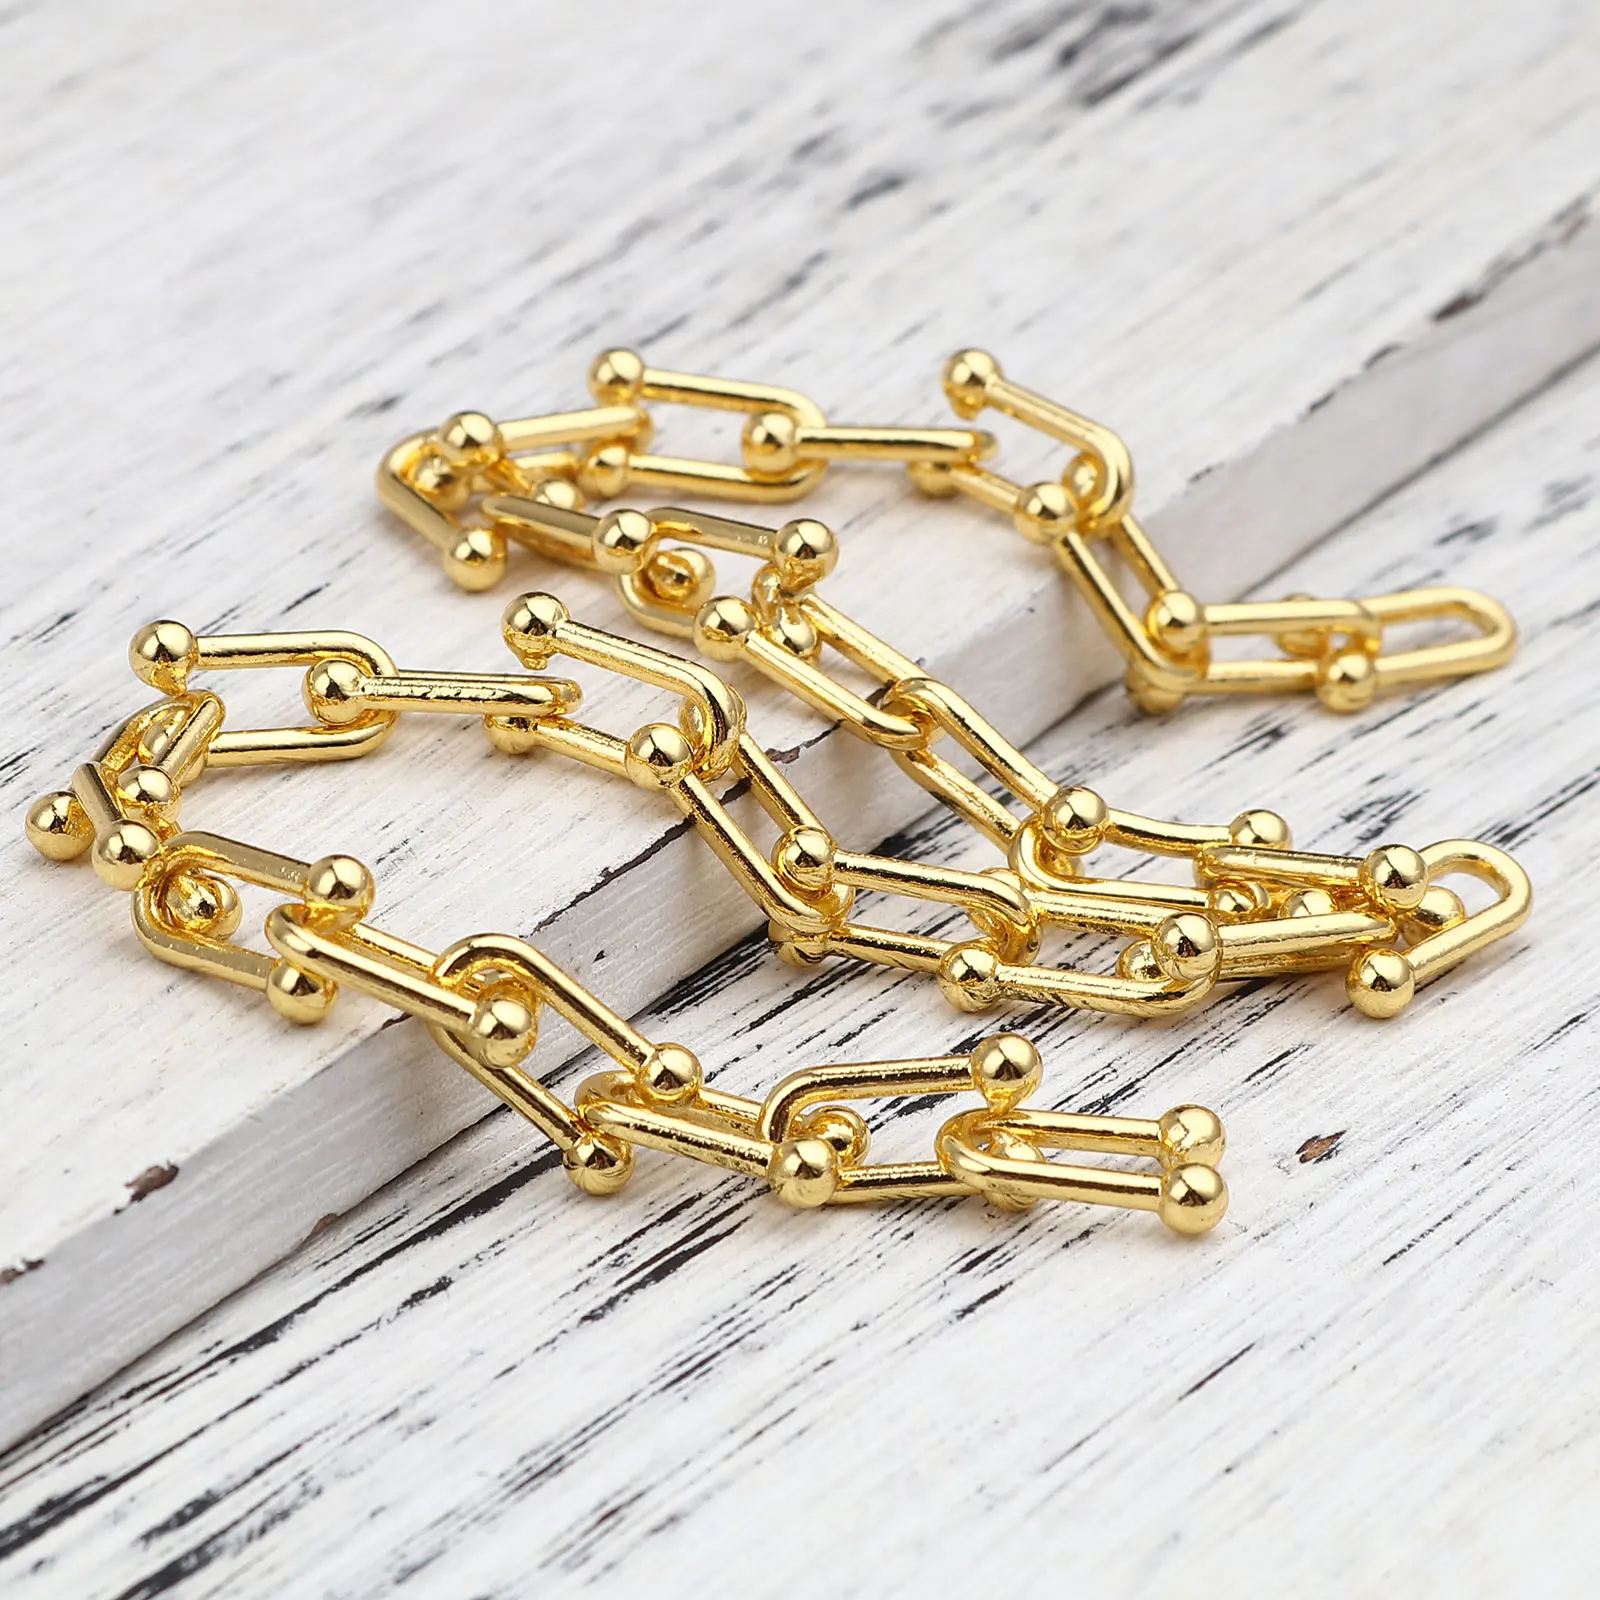 1 M U-shaped  Links Chains Zinc Based Alloy Link Chain Findings Gold Color Silver Color 15x9mm For DIY Necklace Bracelet Making images - 6